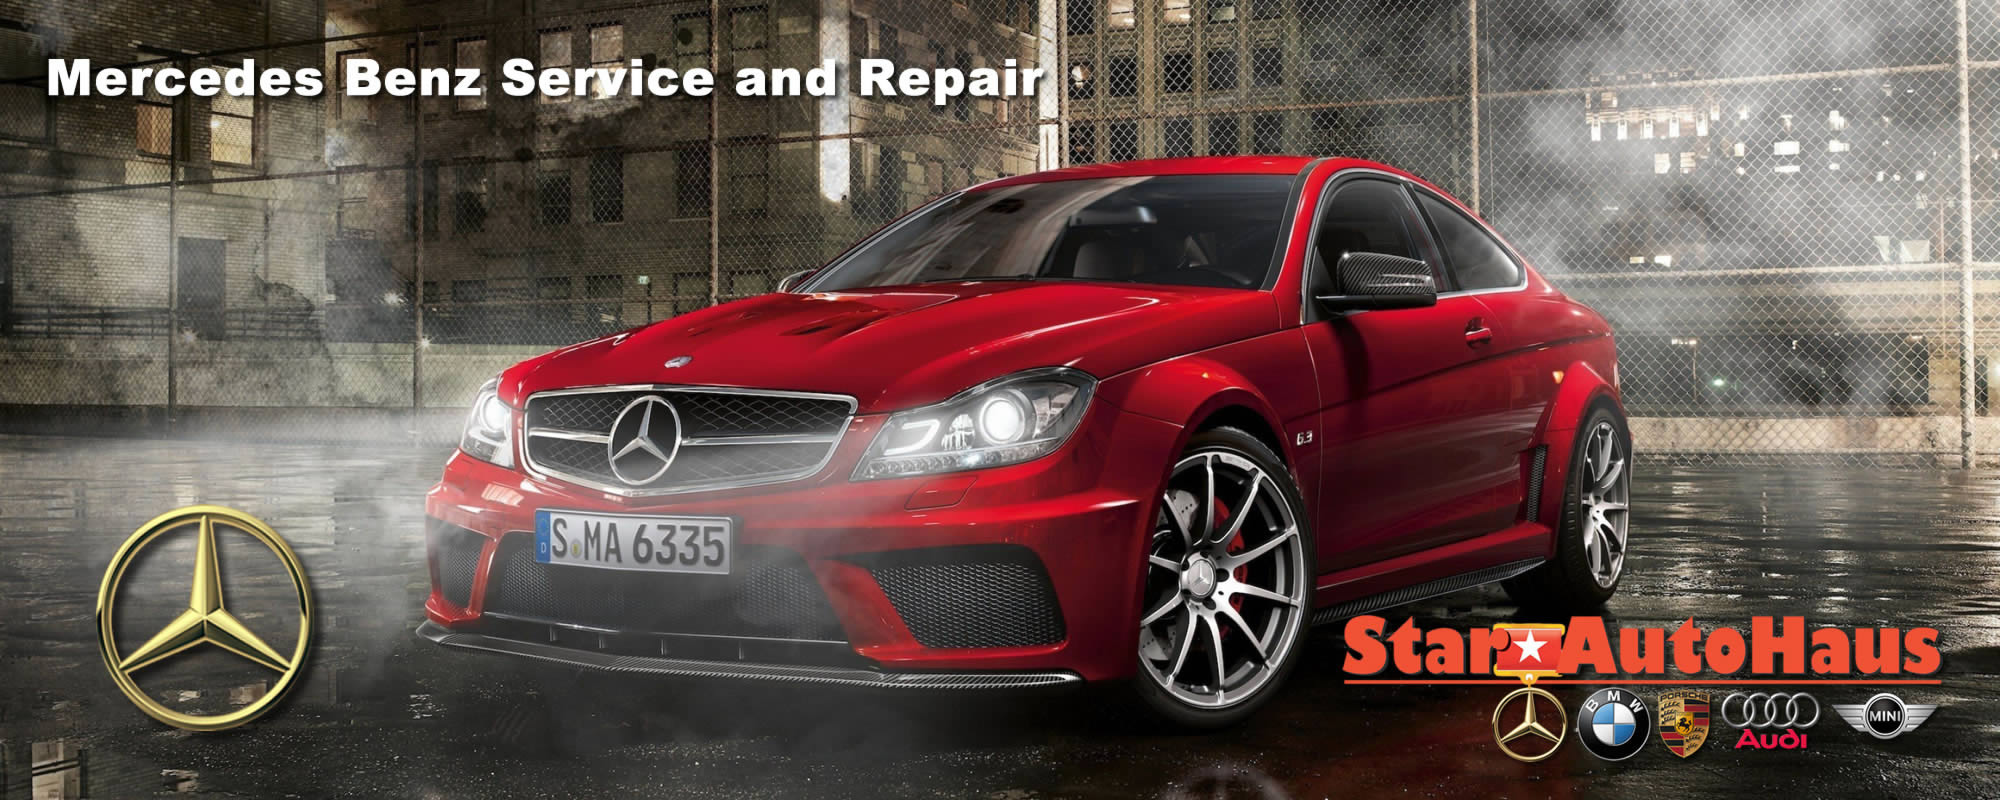 Mercedes Benz Service and Repair